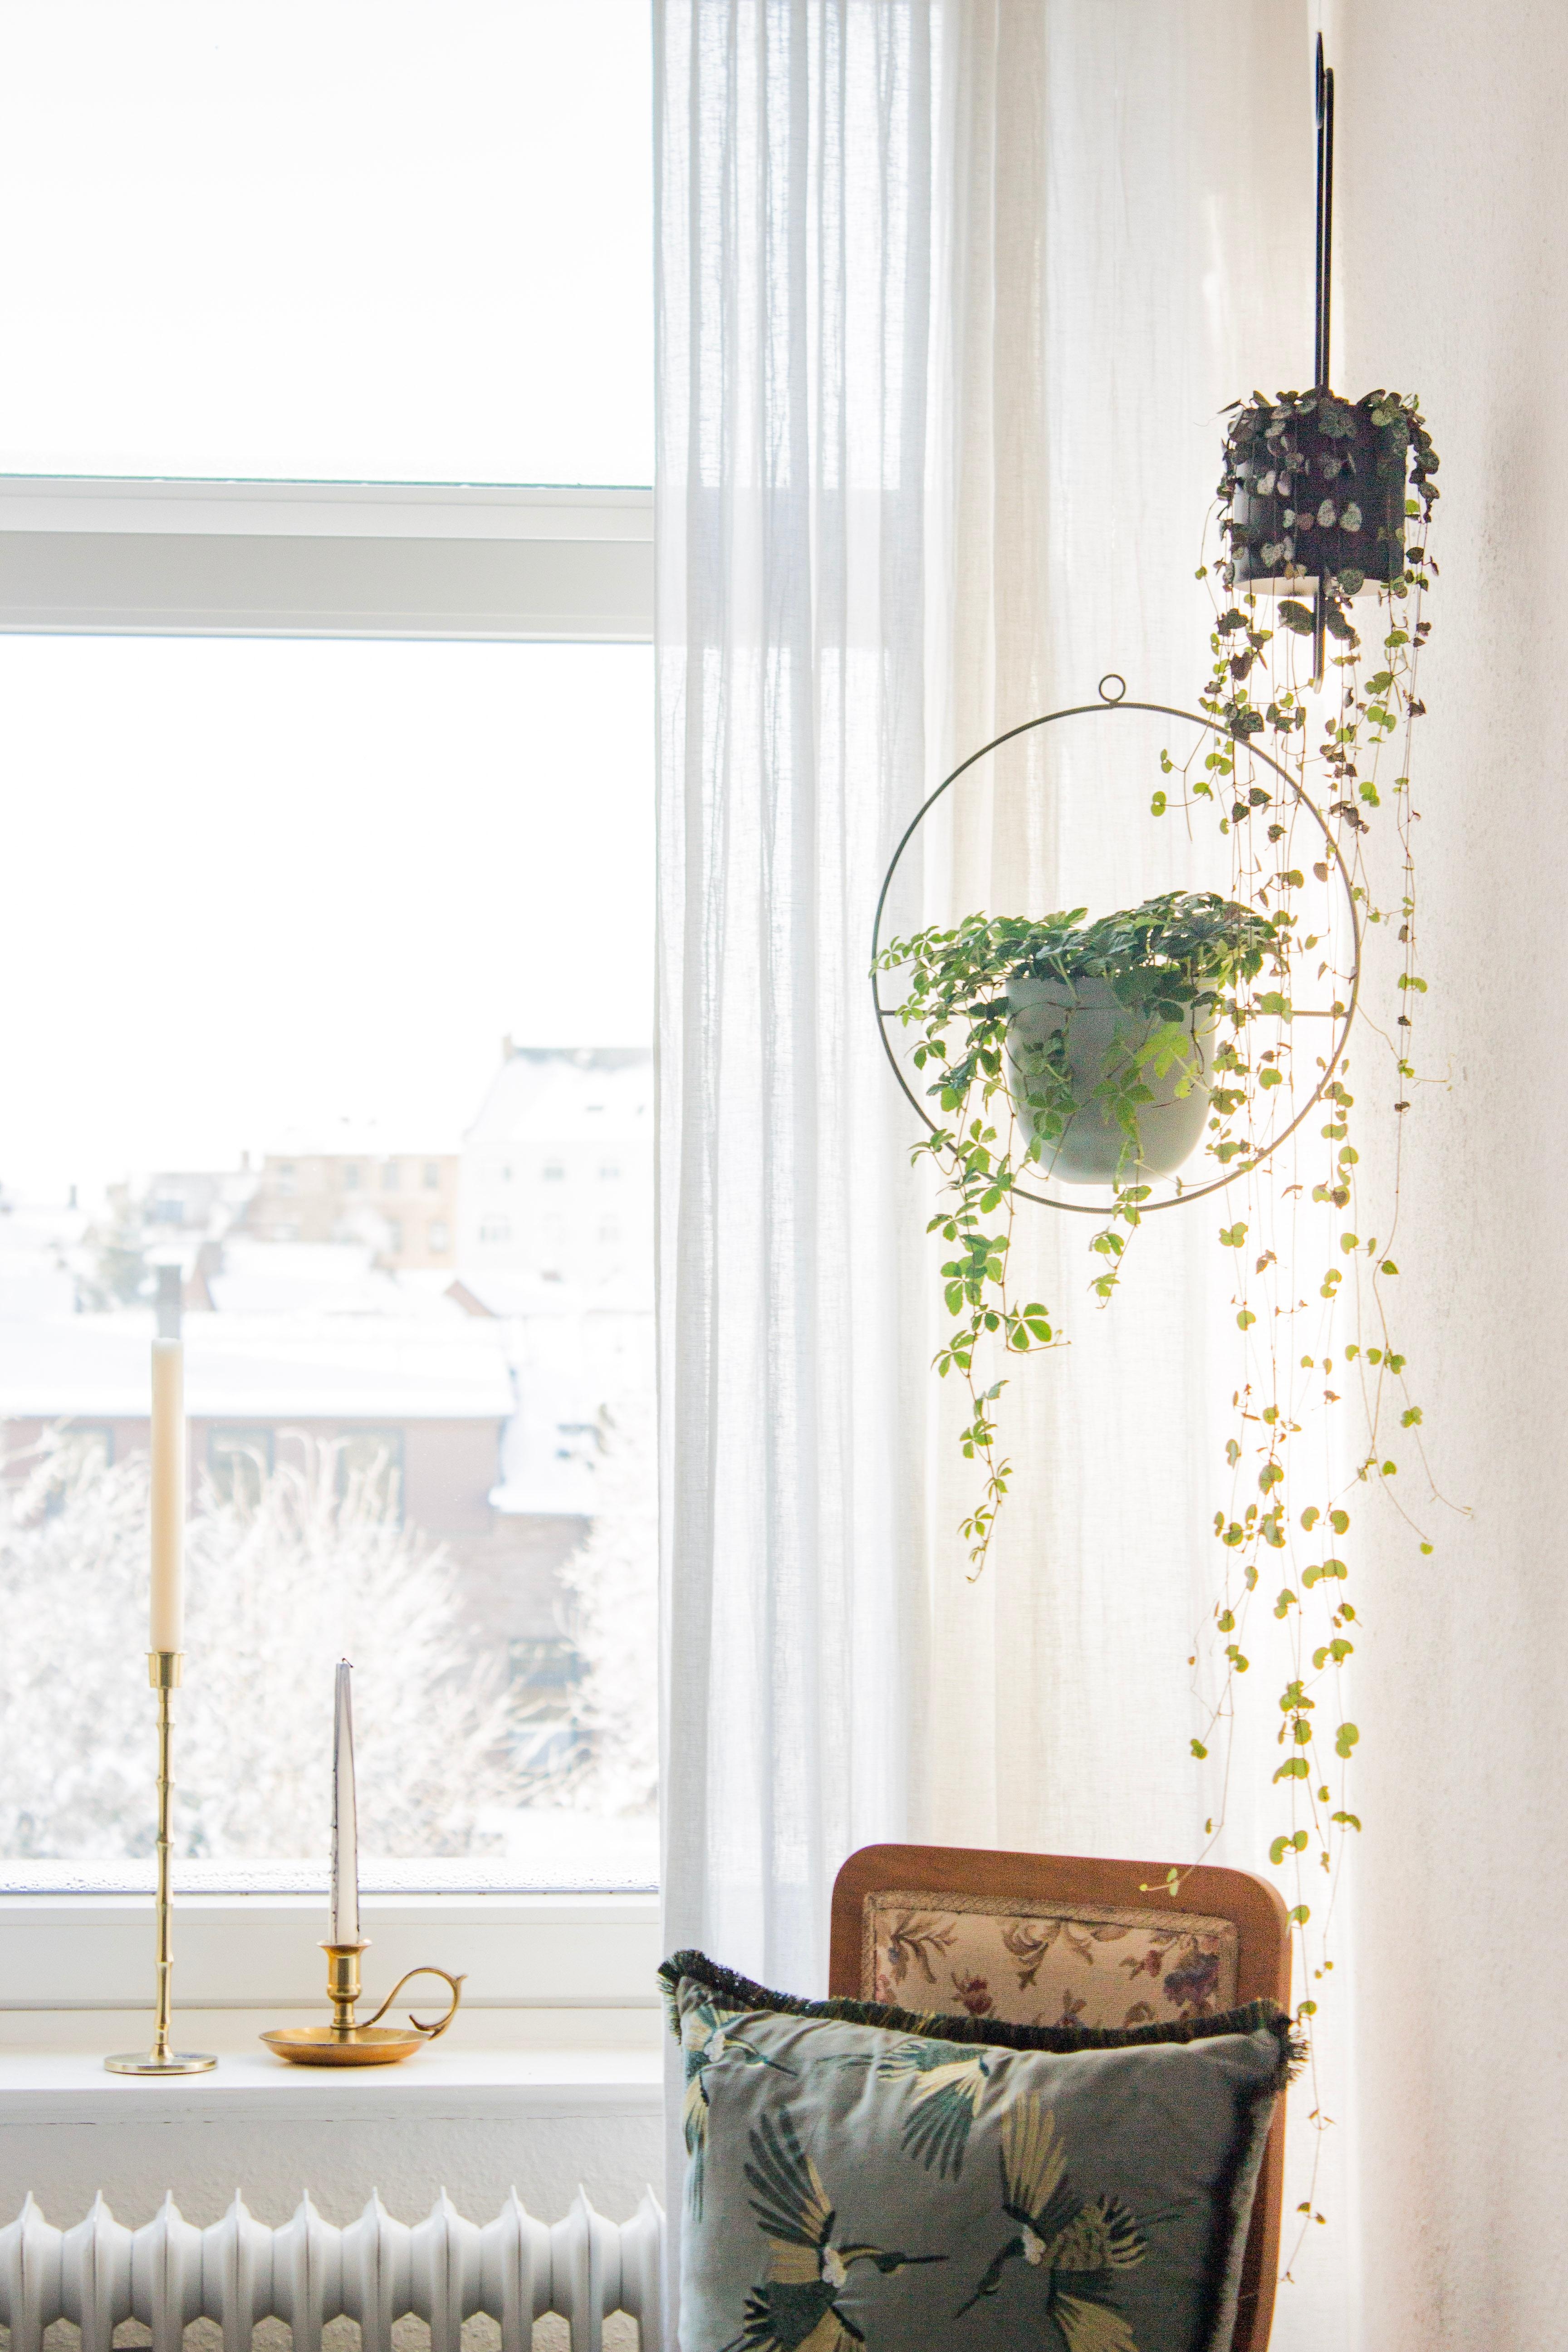 #pflanzenliebe #plantlove #sunshine #morningglory #bedroom #schlafzimmer #hangingplants